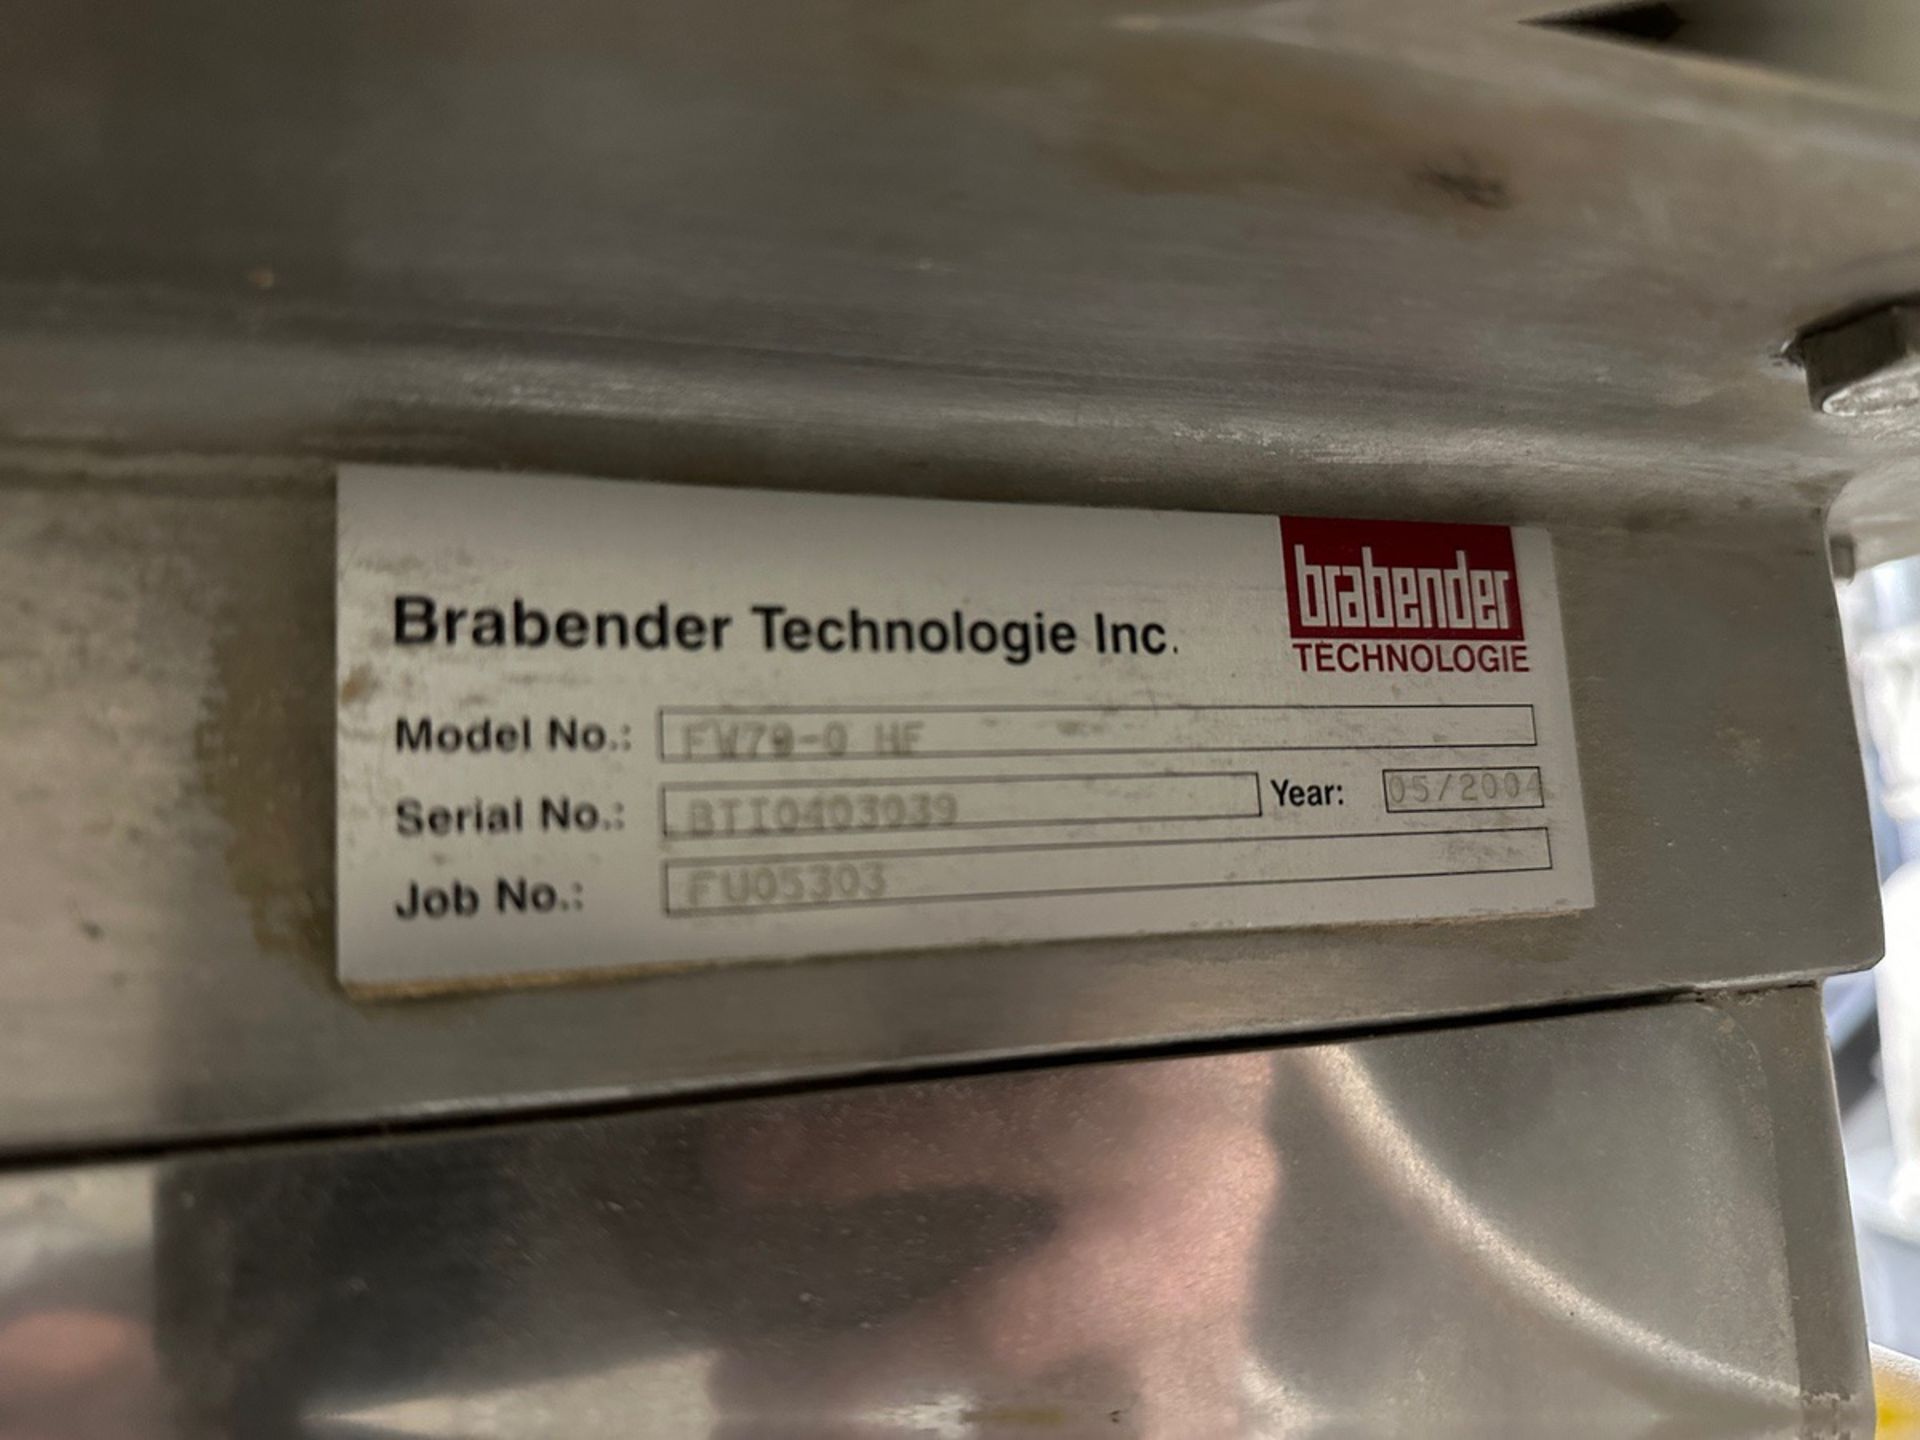 Brabender Stainless Steel Ingredient Hopper - Model FW79-0 HF, S/N BT - Subj to Bulk | Rig Fee $1000 - Image 5 of 5